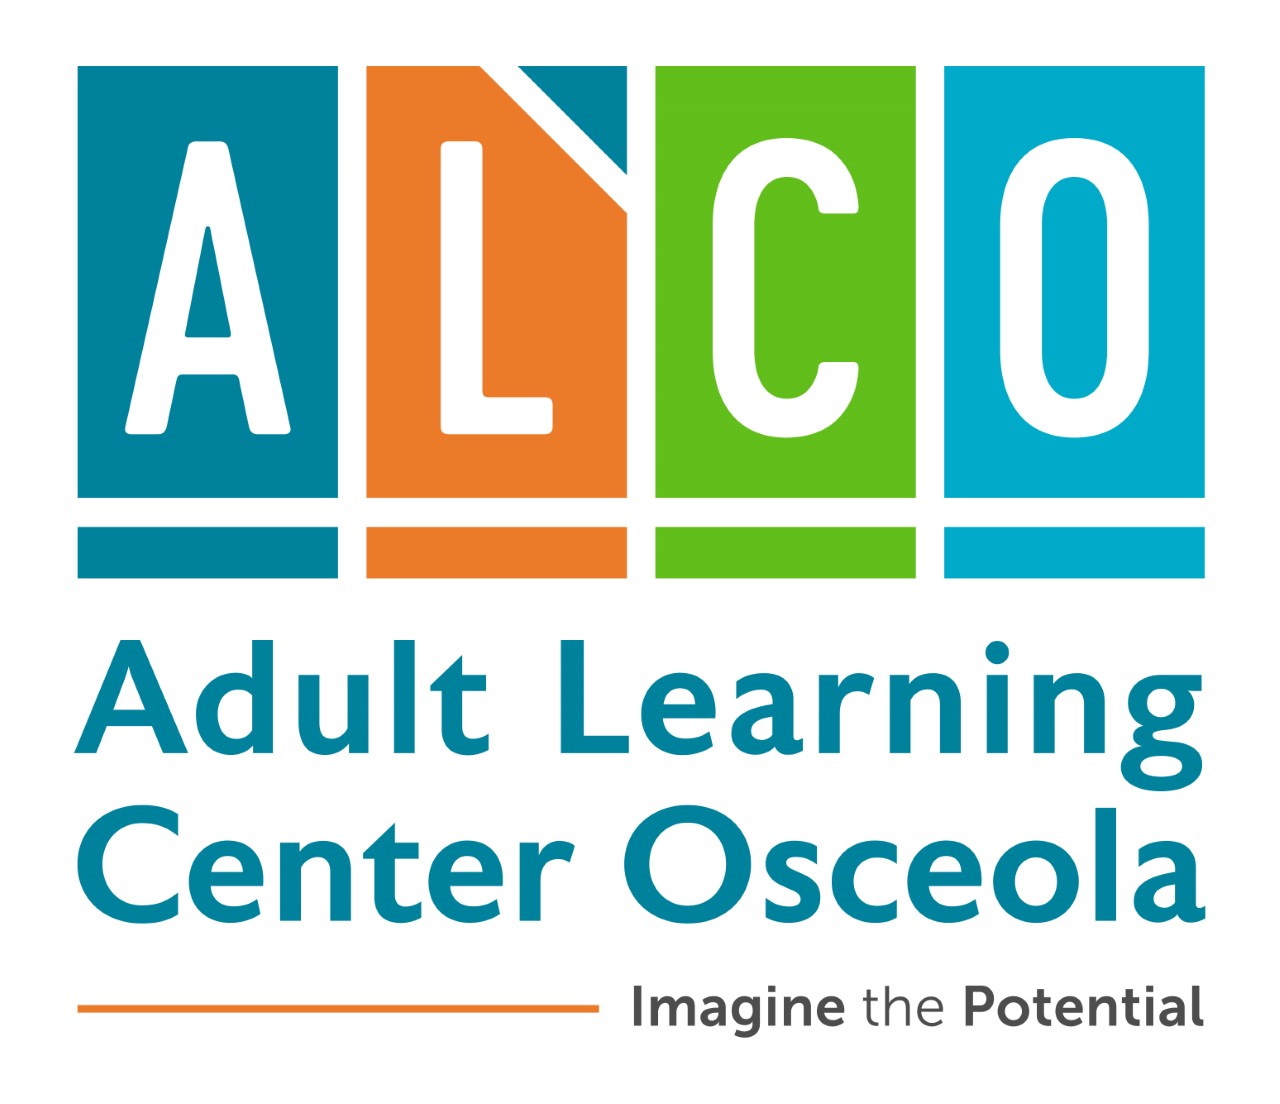 Adult Learning Center Osceola logo